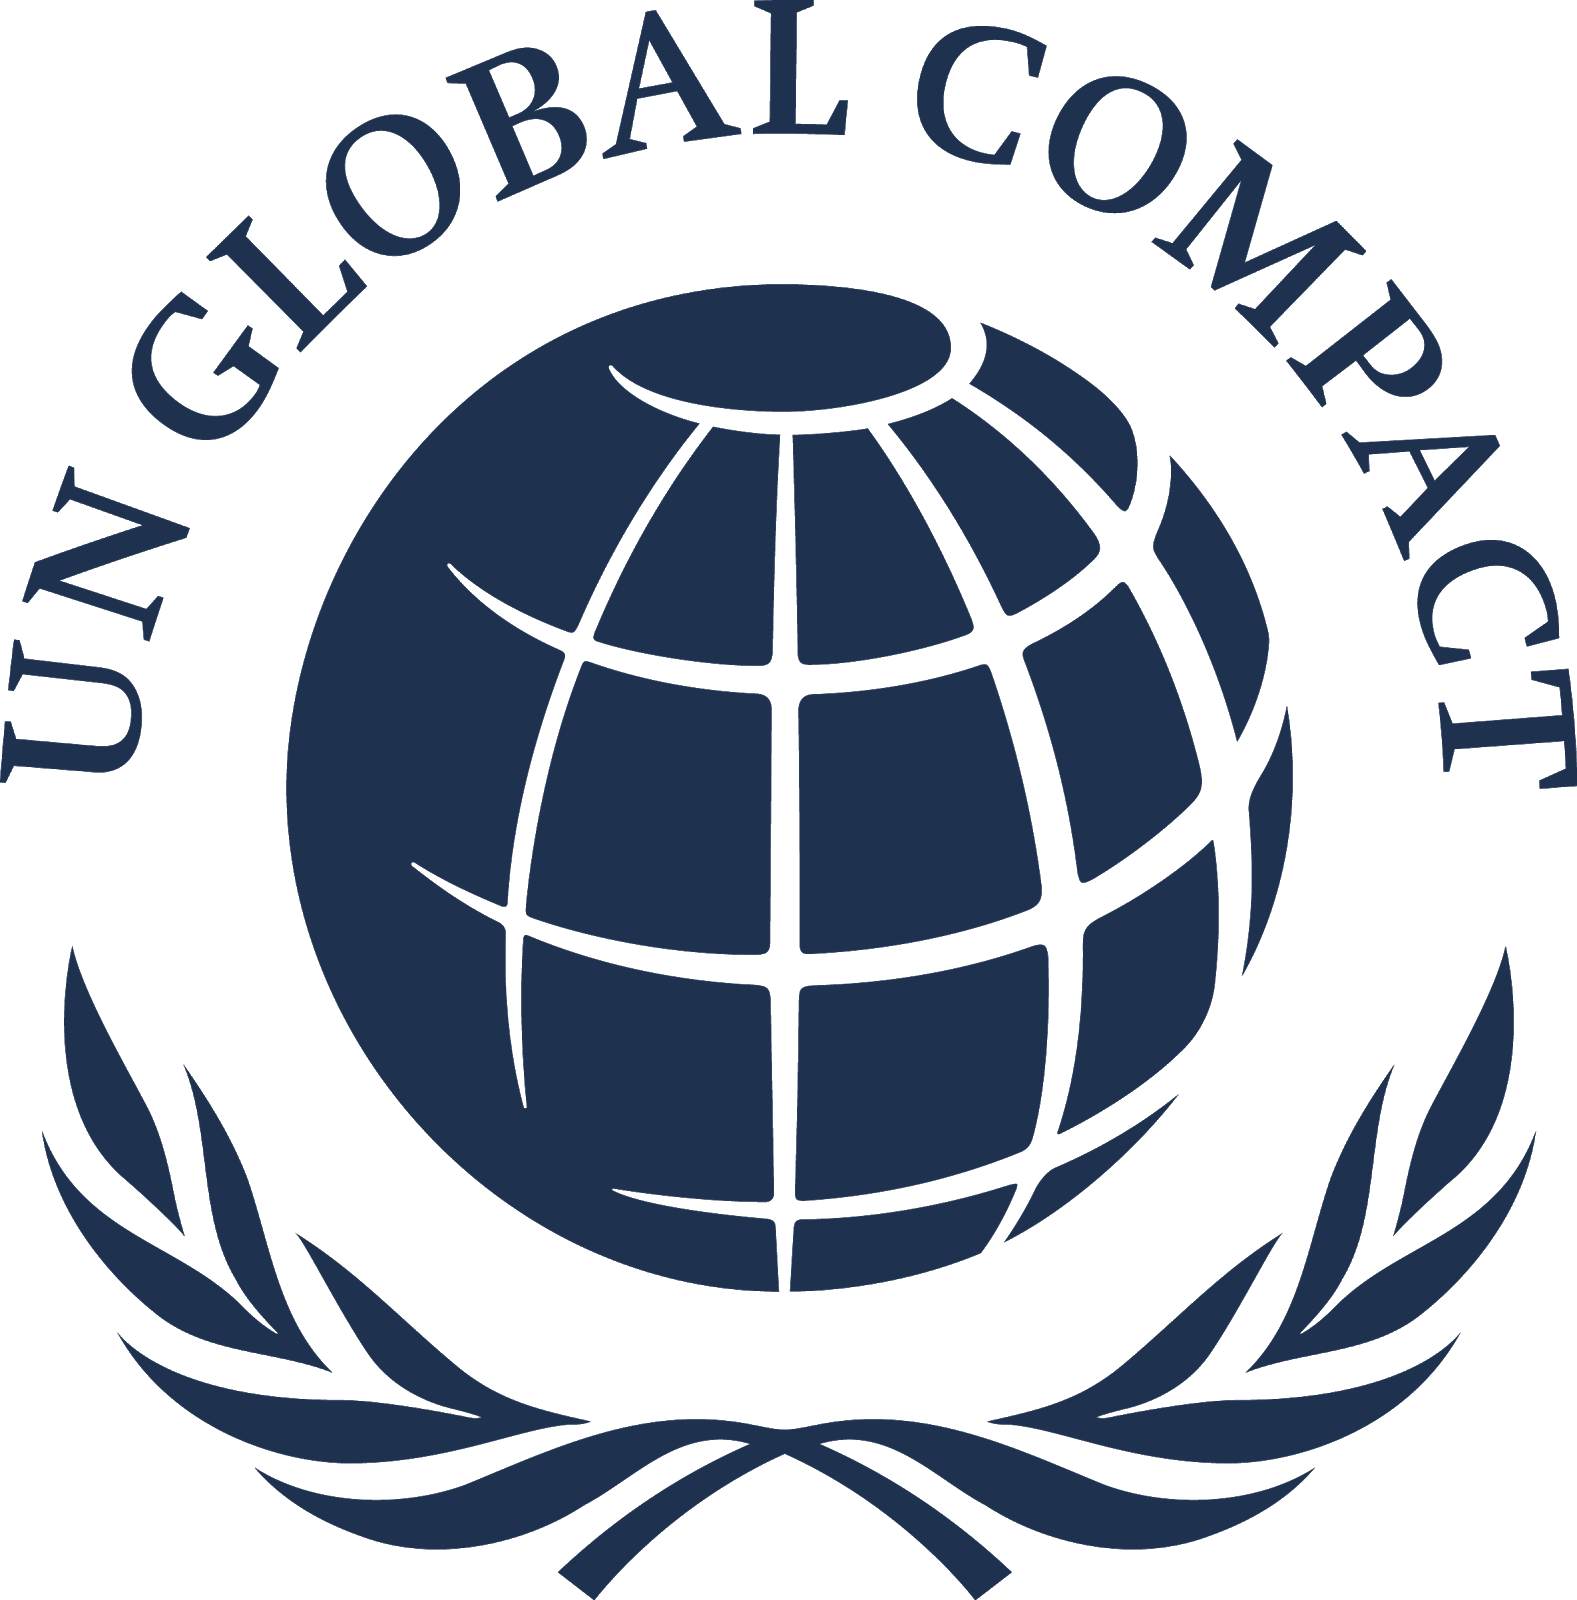 The UN Global Compac